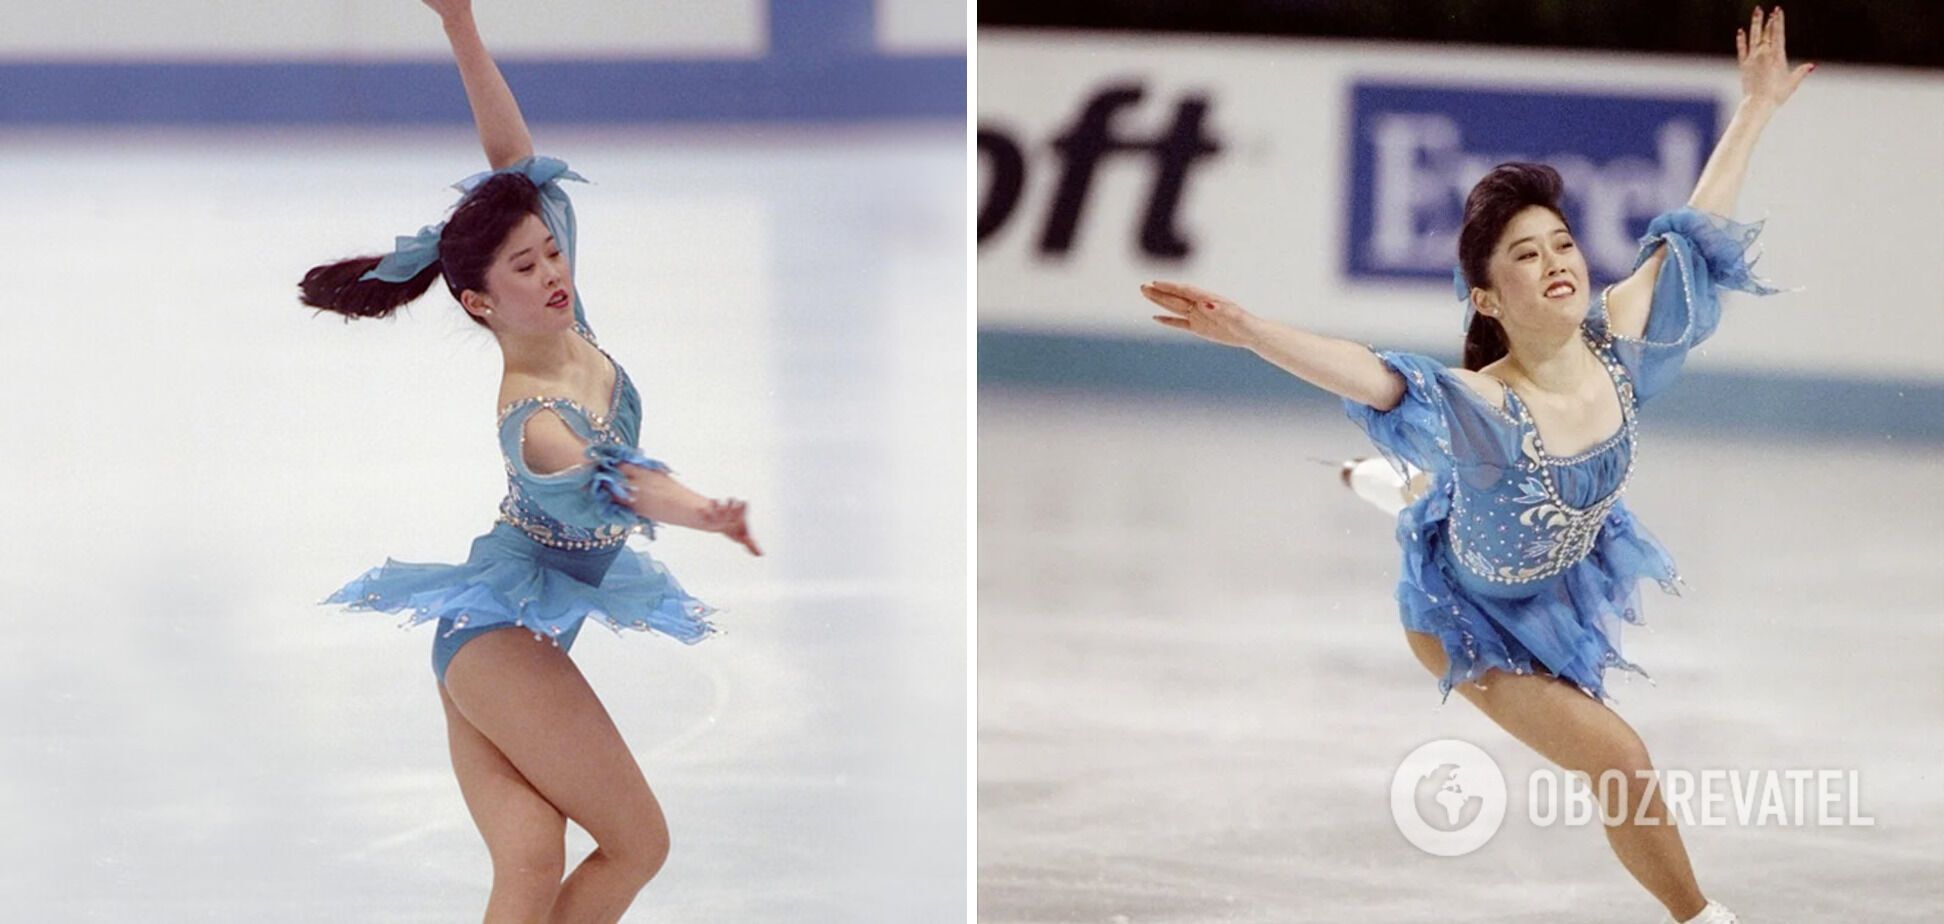 Кристи Ямагучи выступала на Олимпиаде 1992 года.